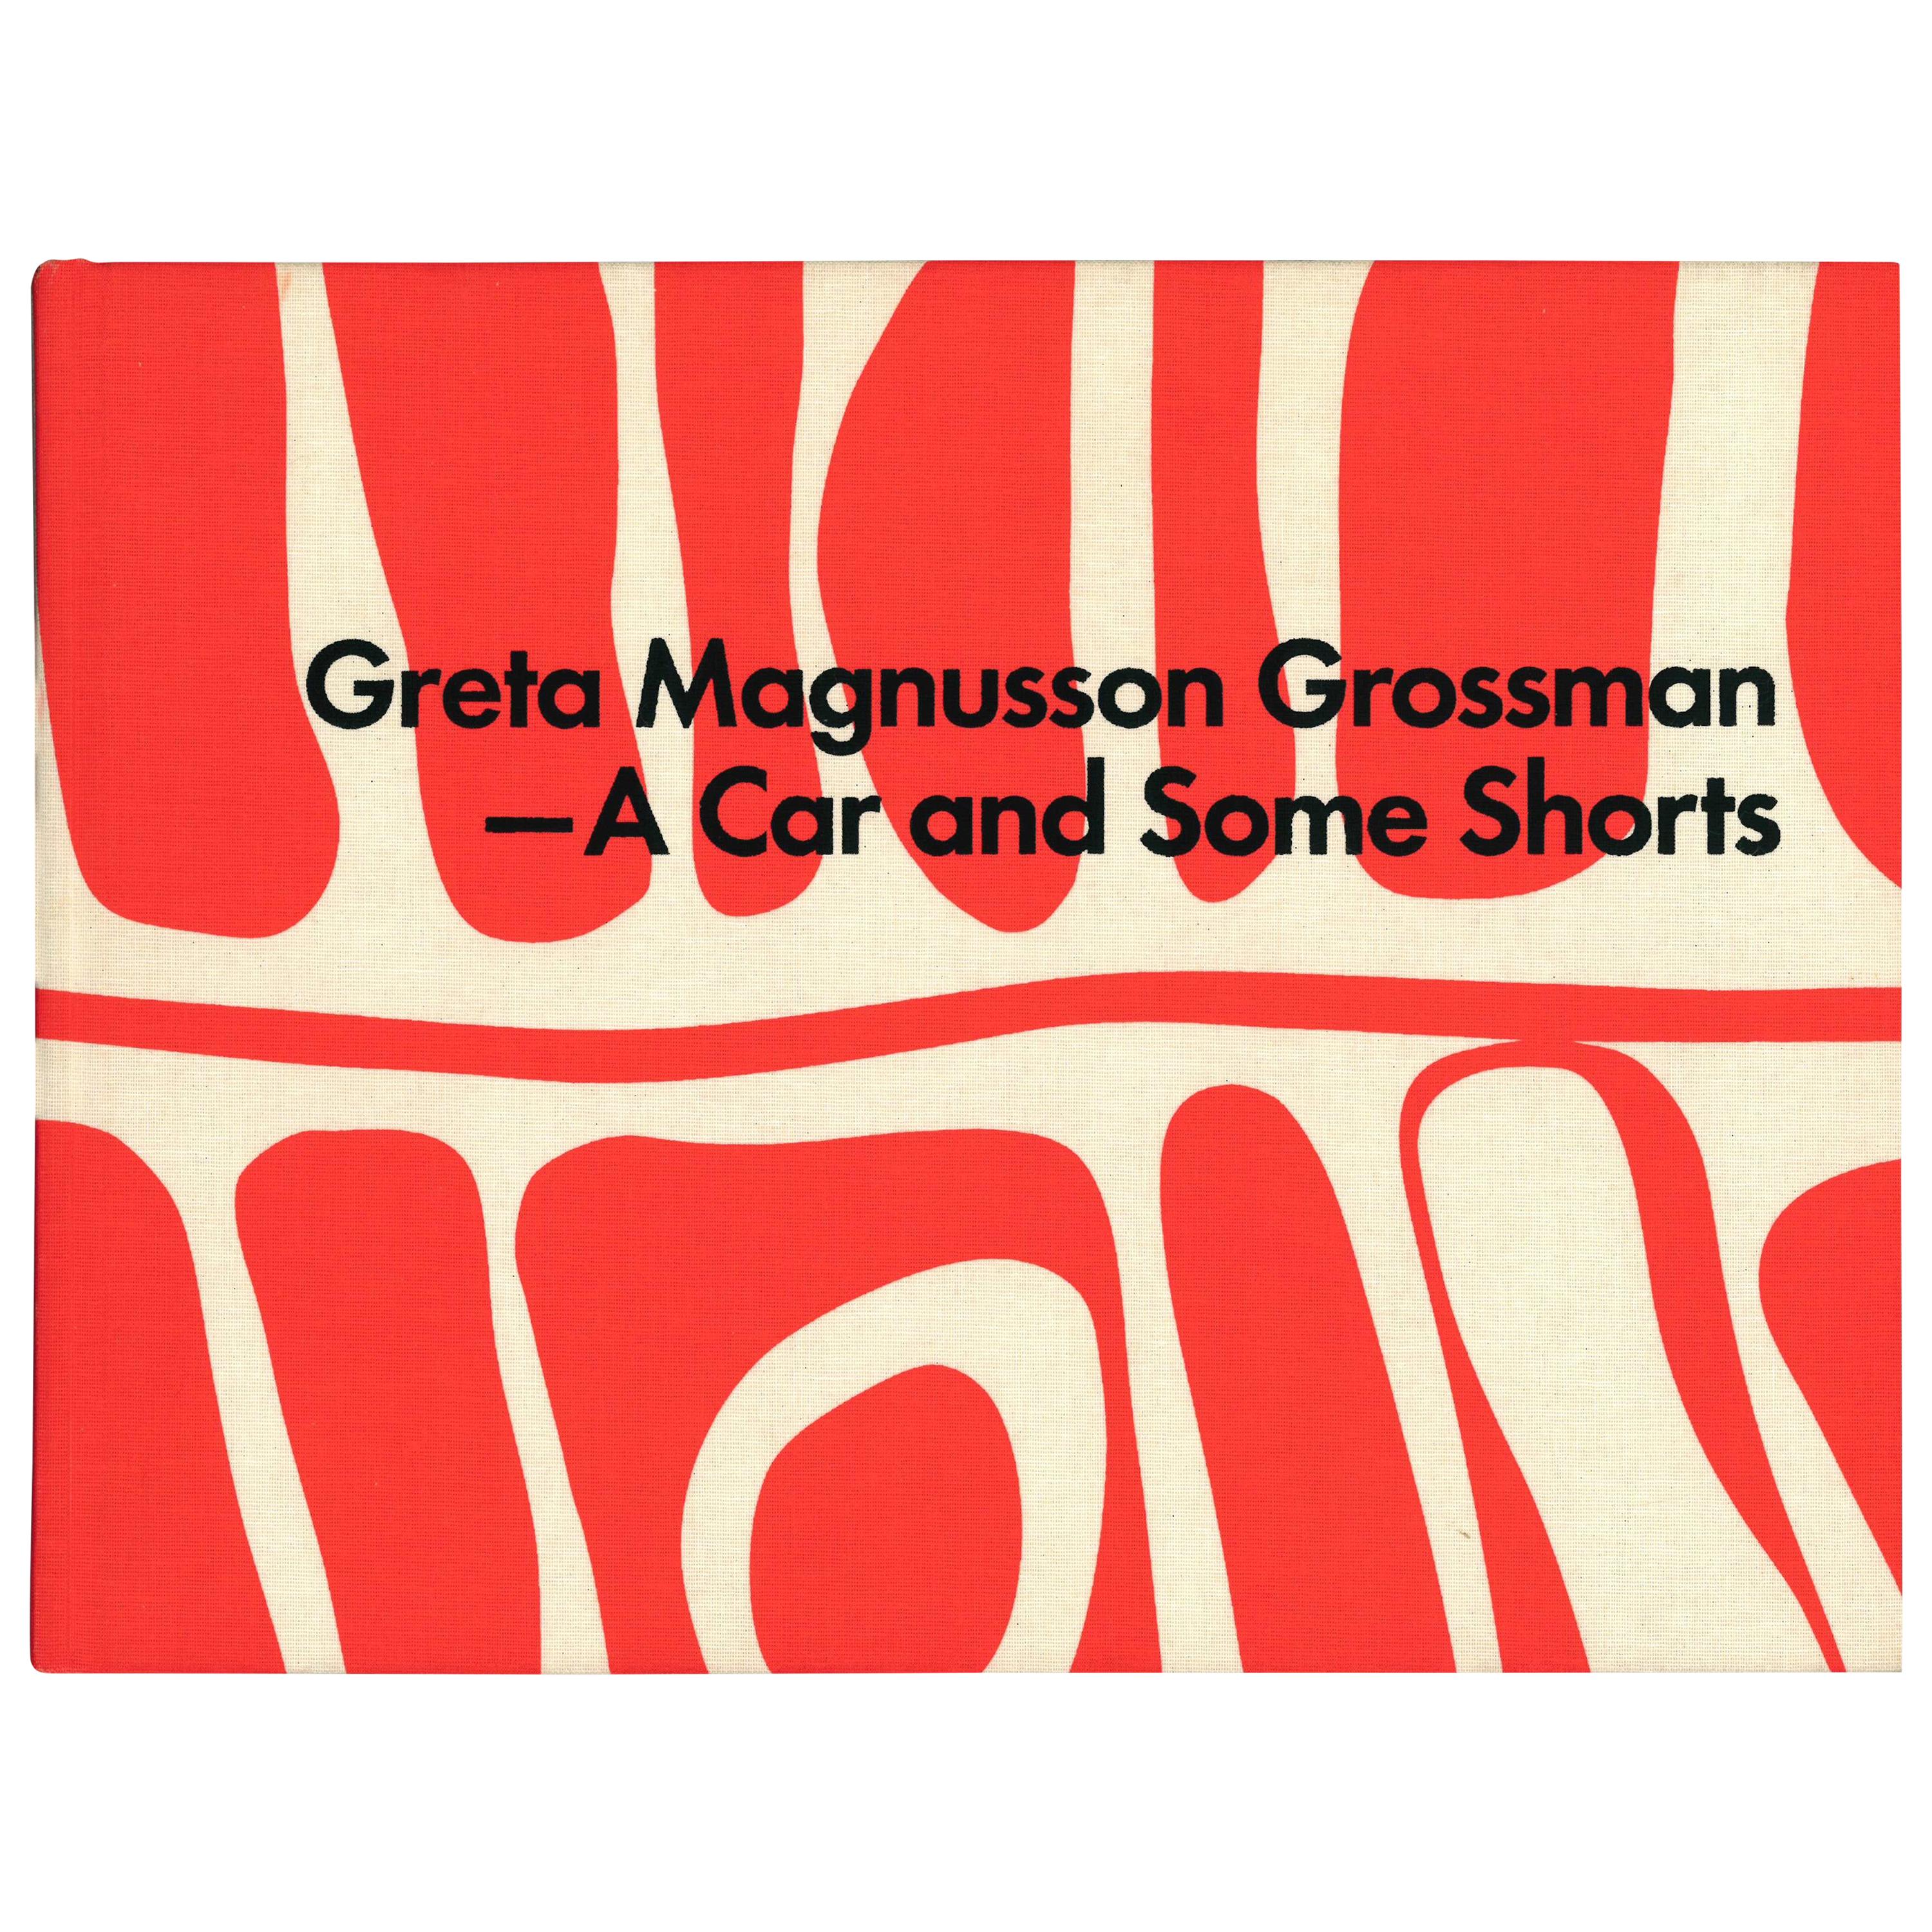 Greta Magnusson Grossman: A Car and Some Shorts (Book)